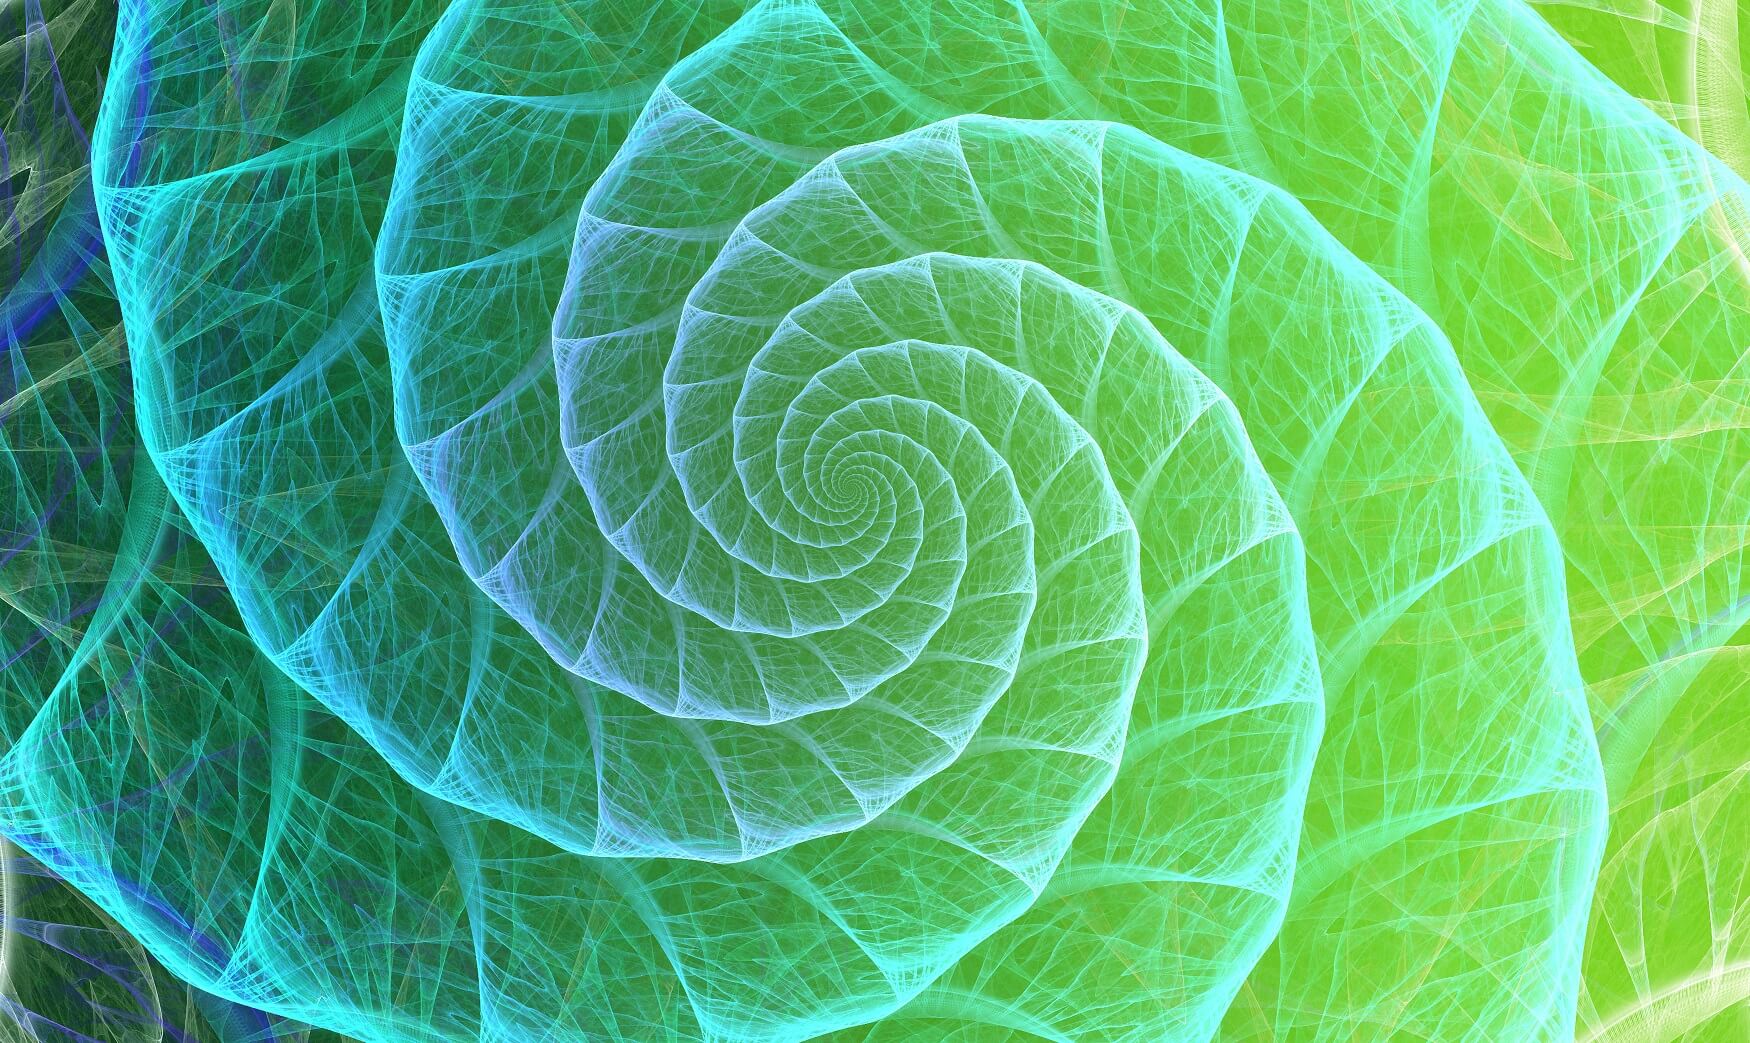 counterclockwise spiral